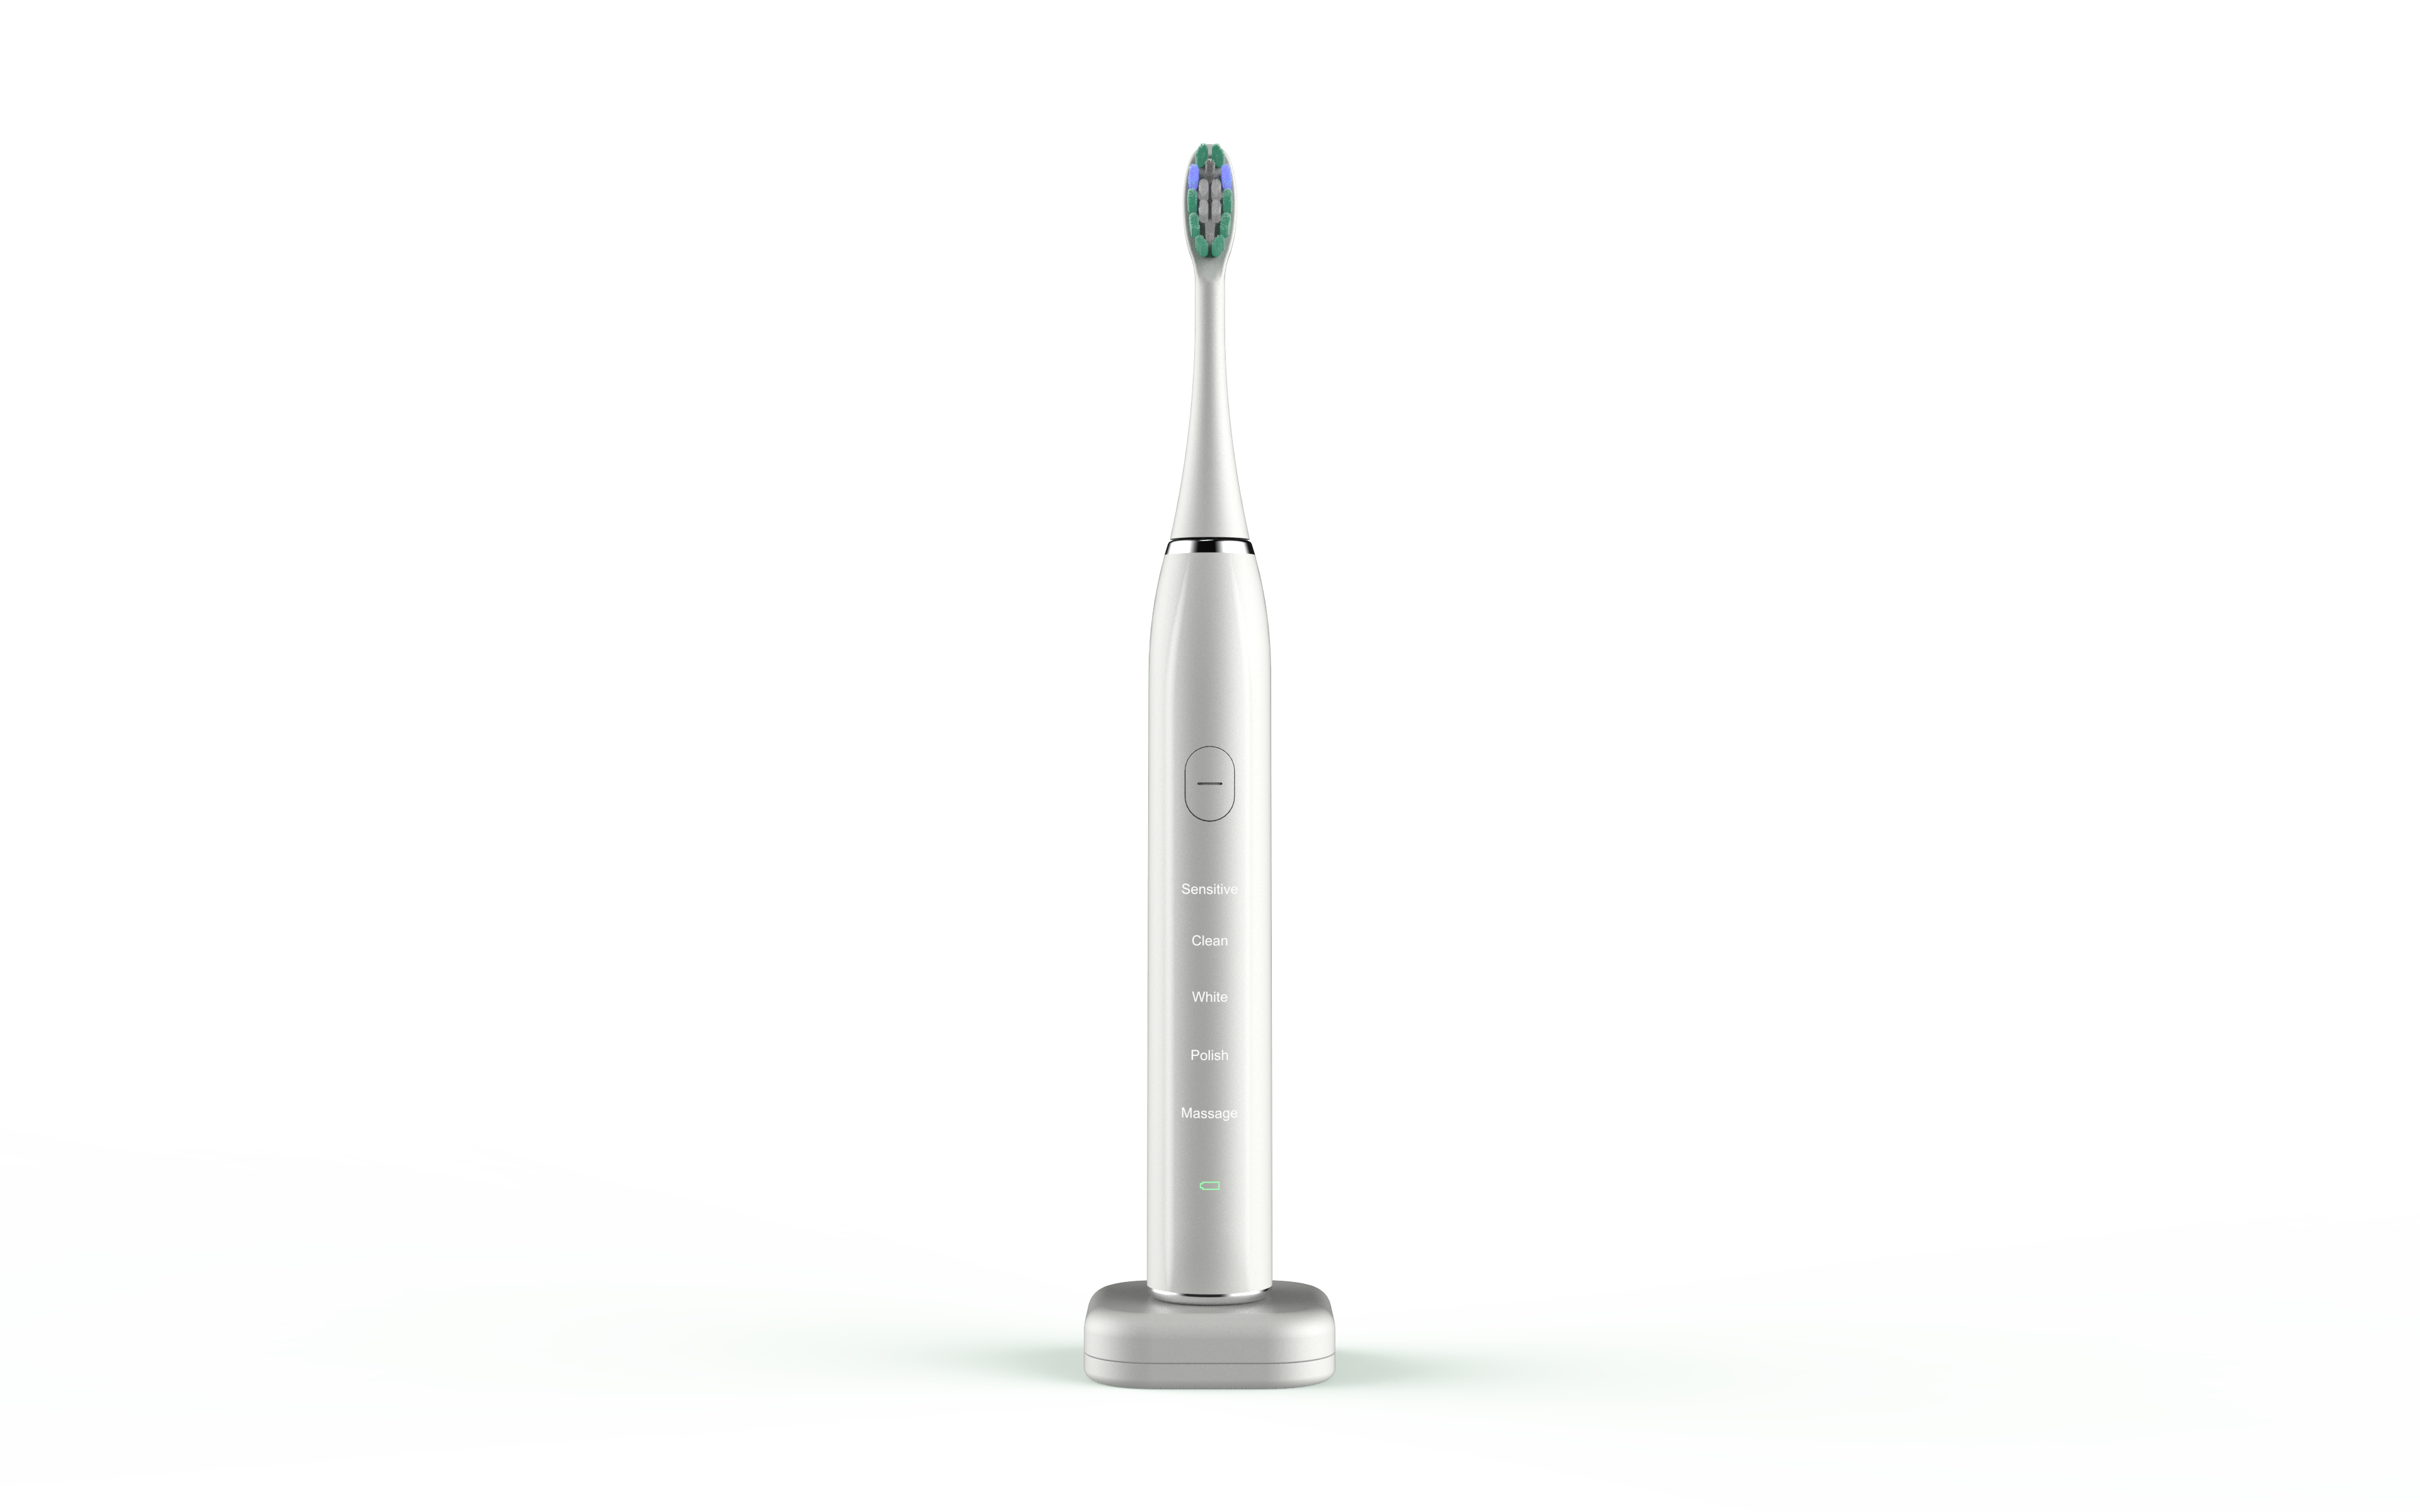  Smart Sonic Dental Care Toothbrush With 8 Brush Heads by VistaShops VistaShops Perfumarie